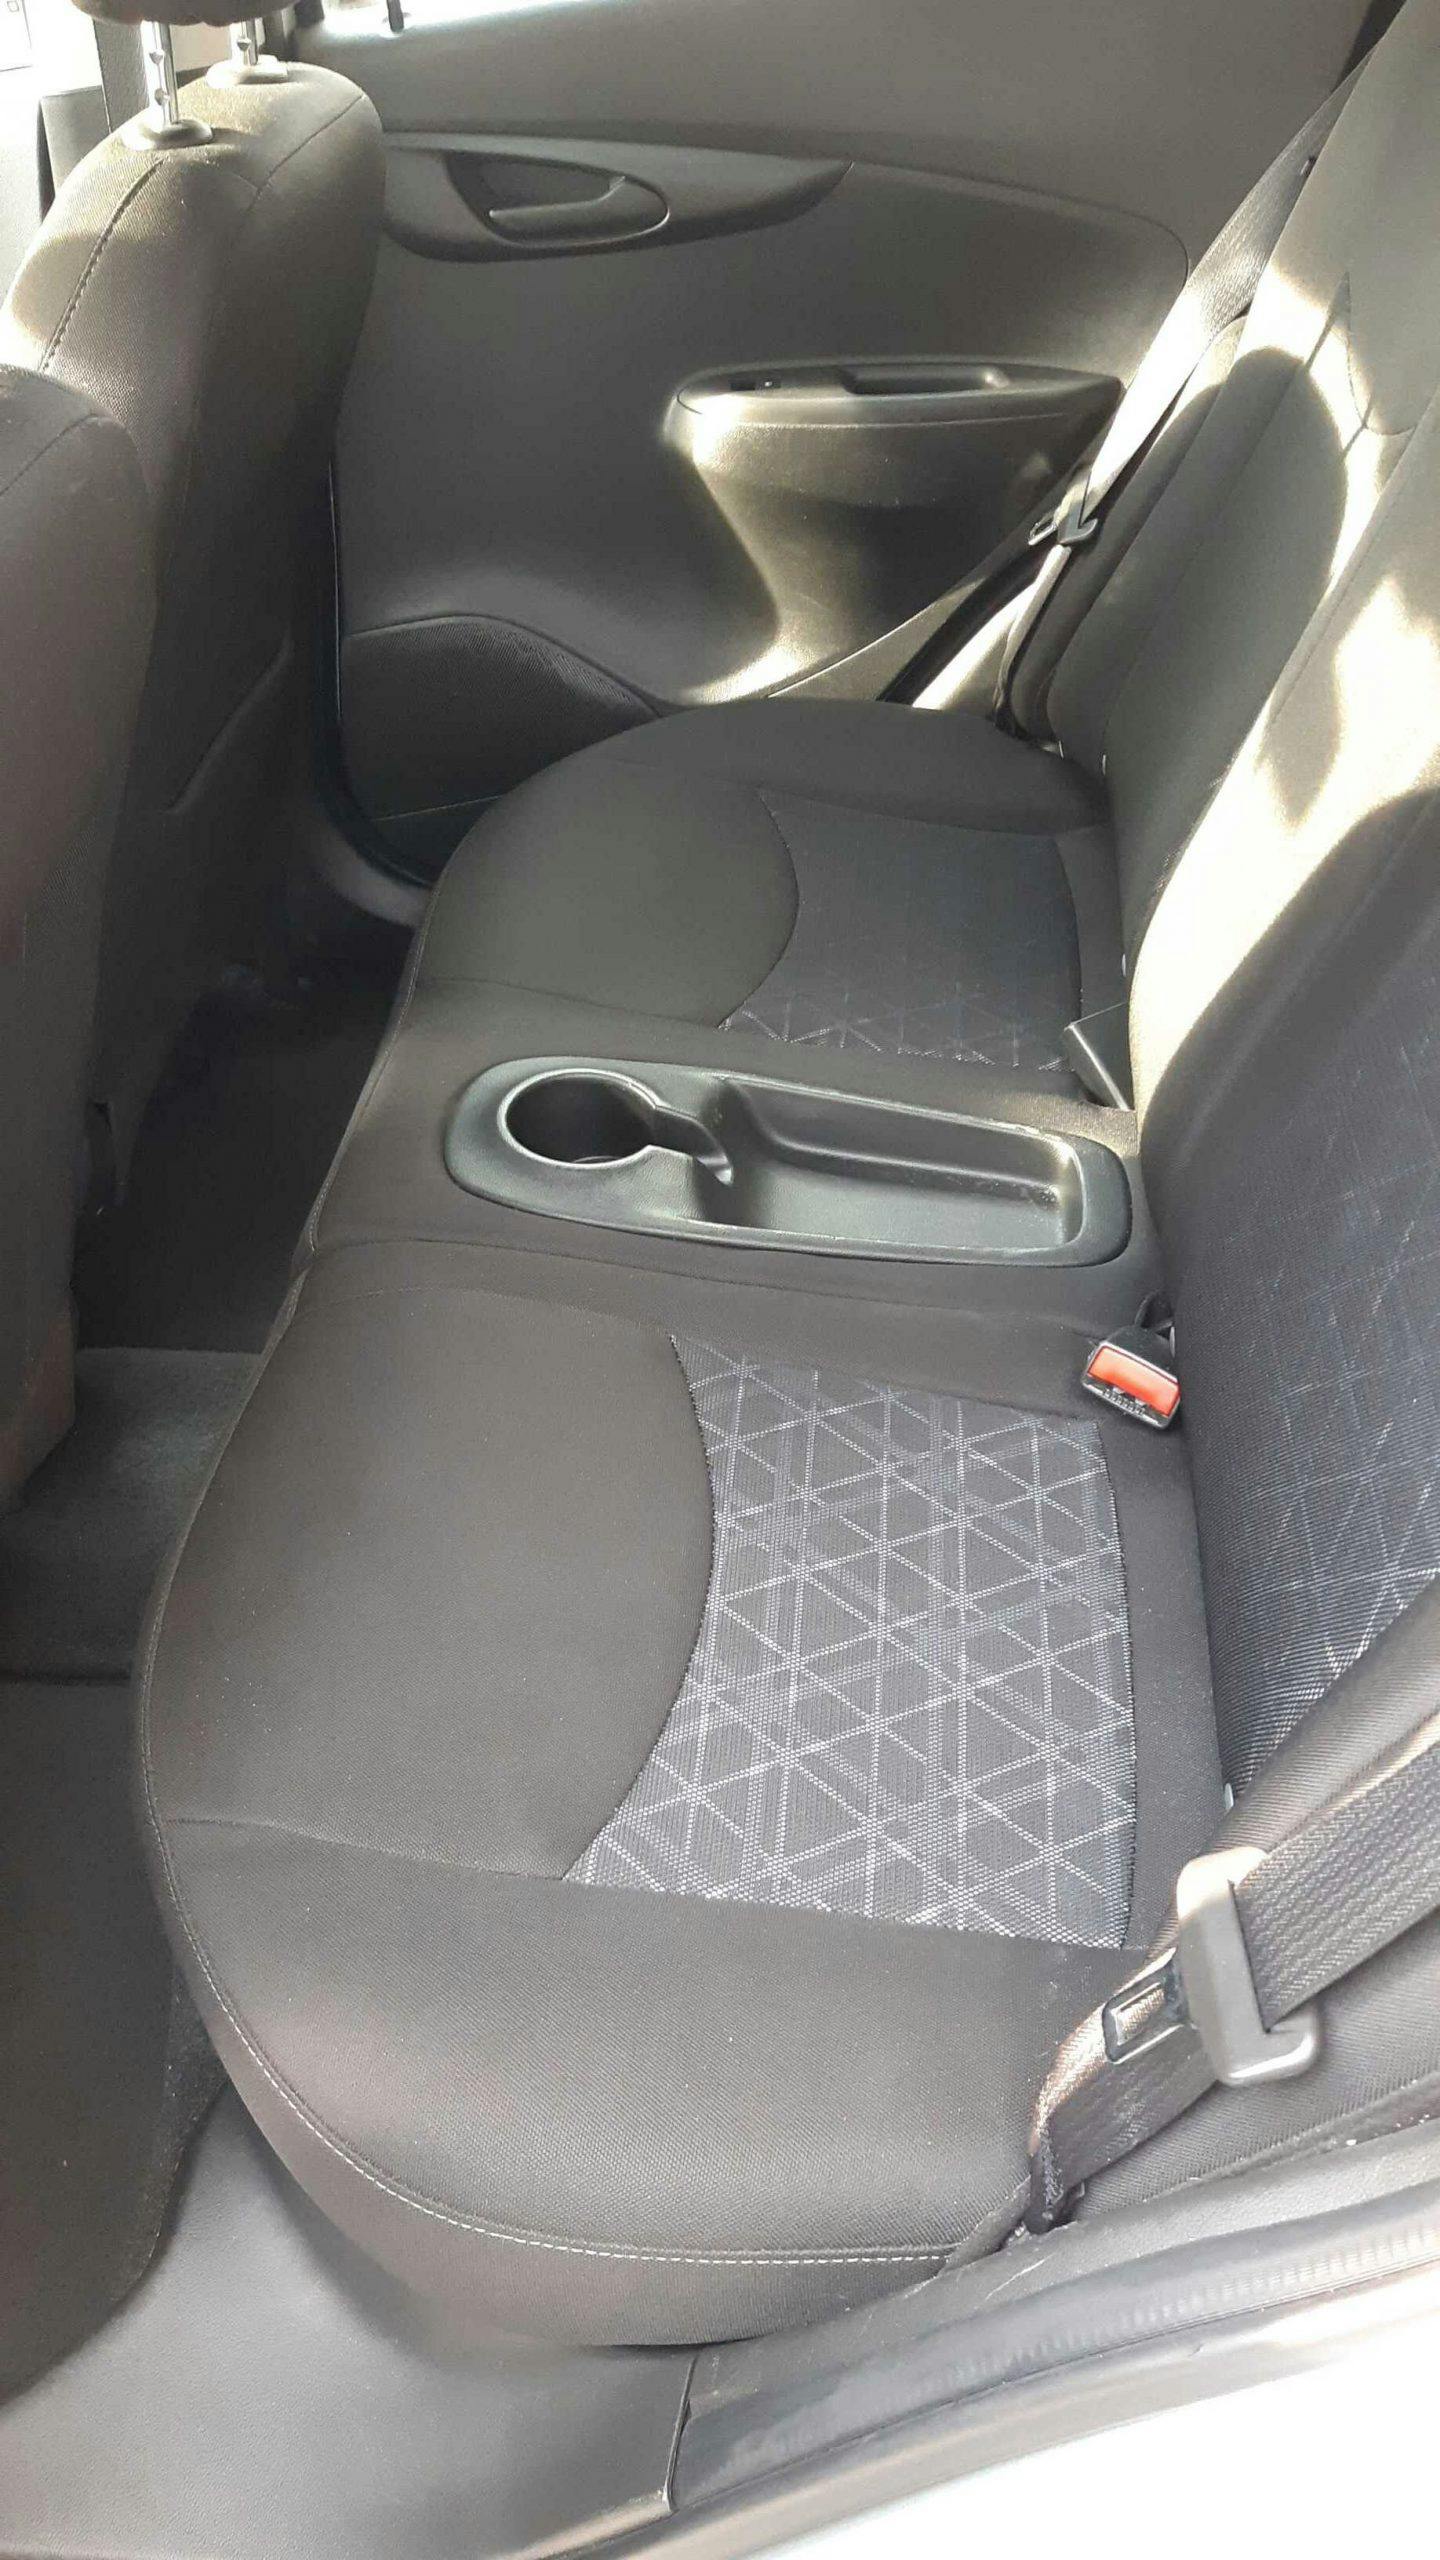 Chevrolet Spark interior rear seat